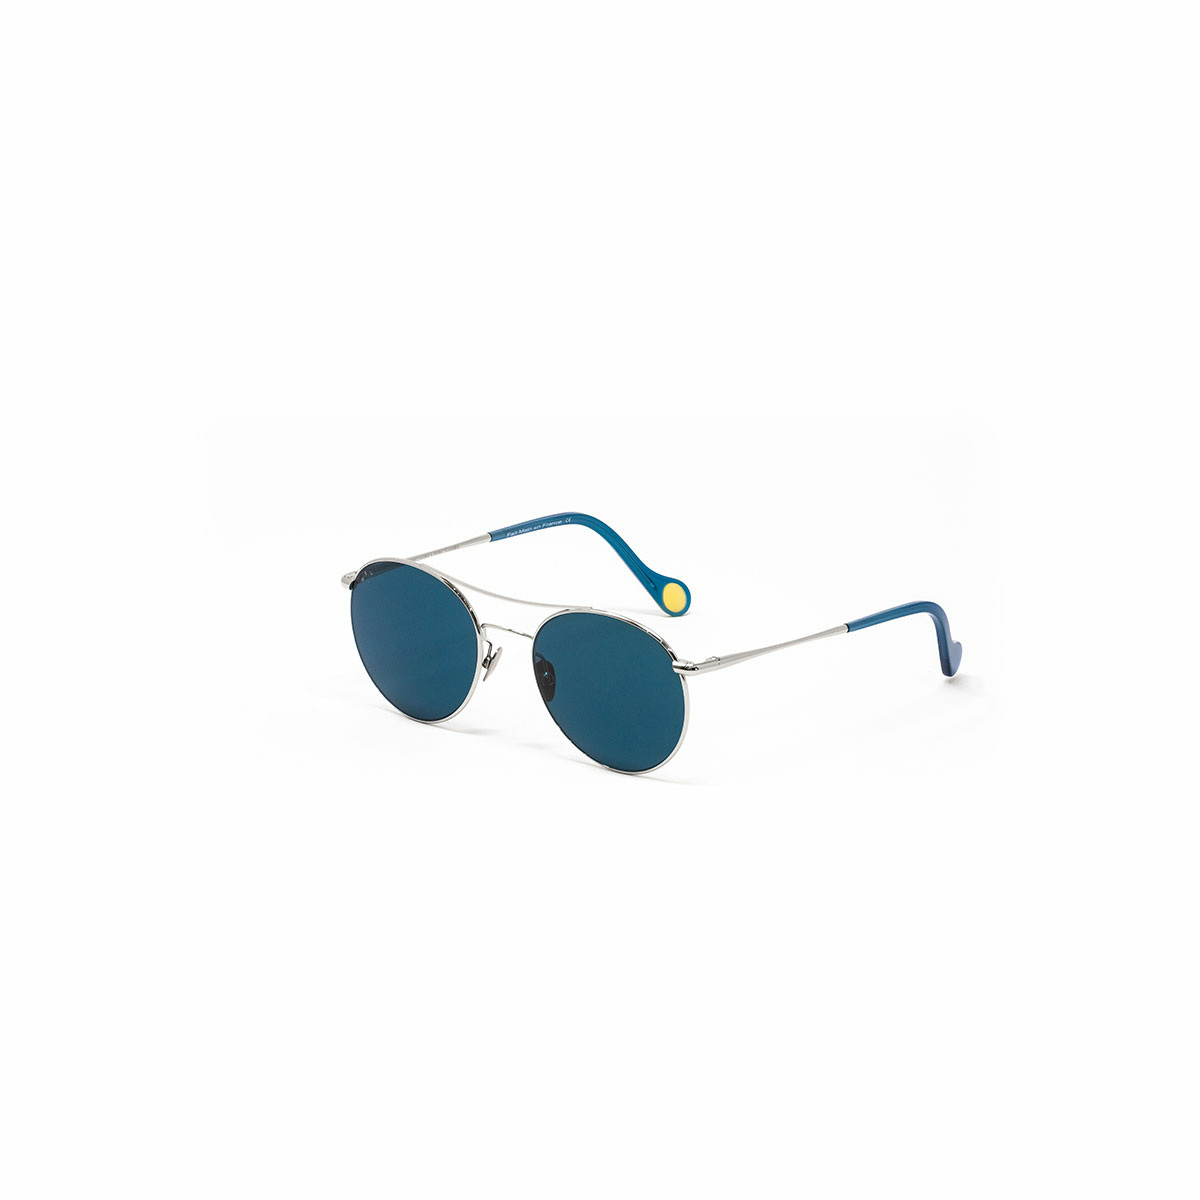 Sunglasses Billie, Blue - Size 53-20 - Steel - image 2